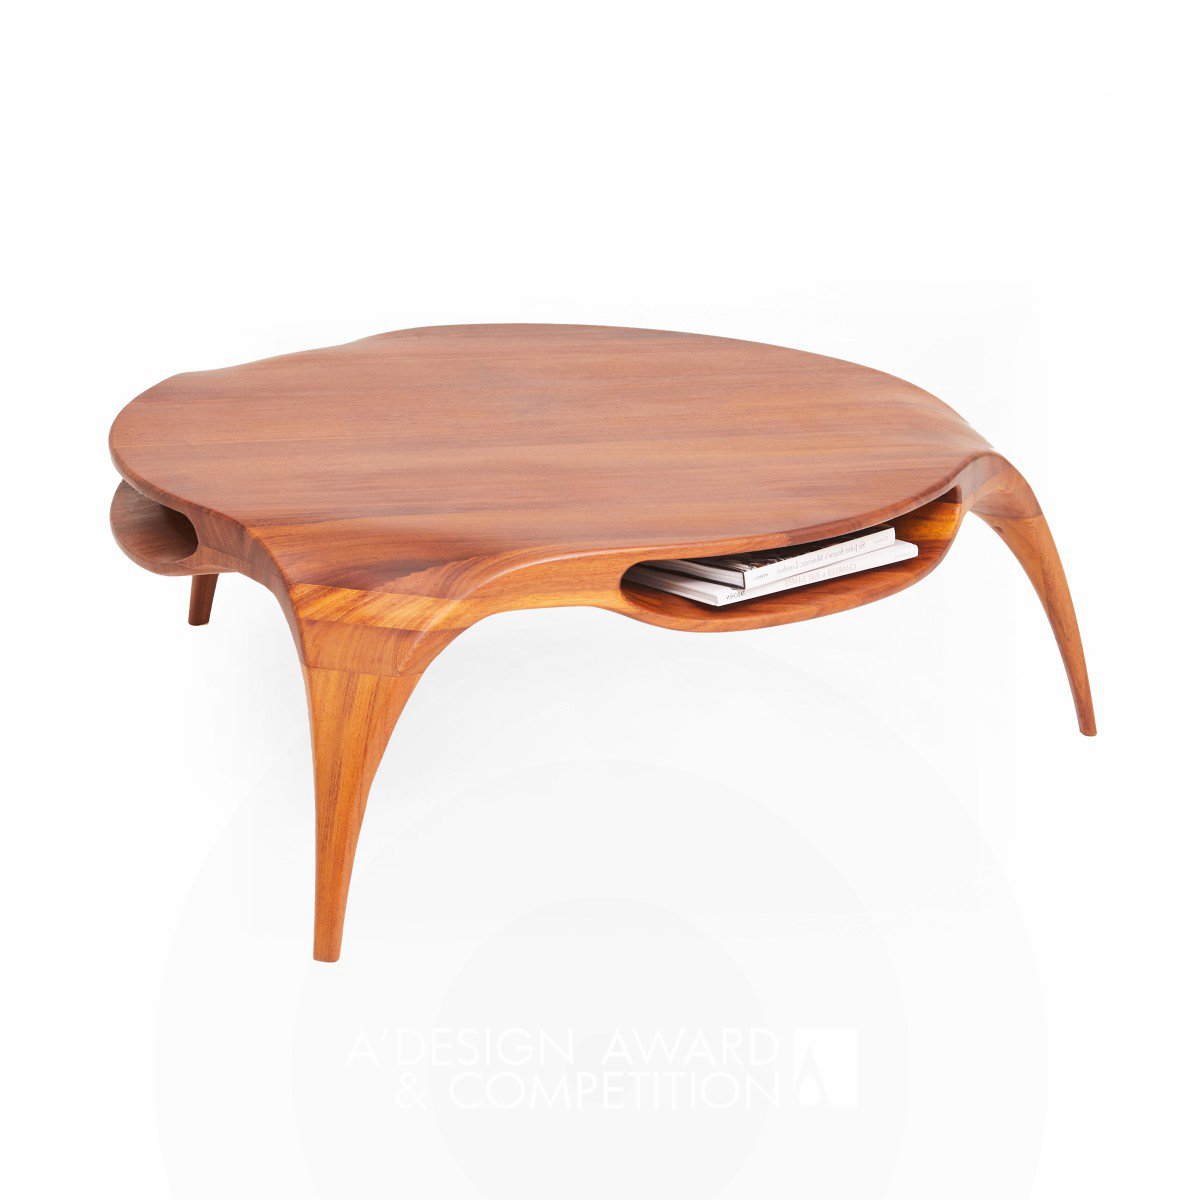 Sankao Coffee Table by Pablo Vidiella Golden Furniture Design Award Winner 2021 